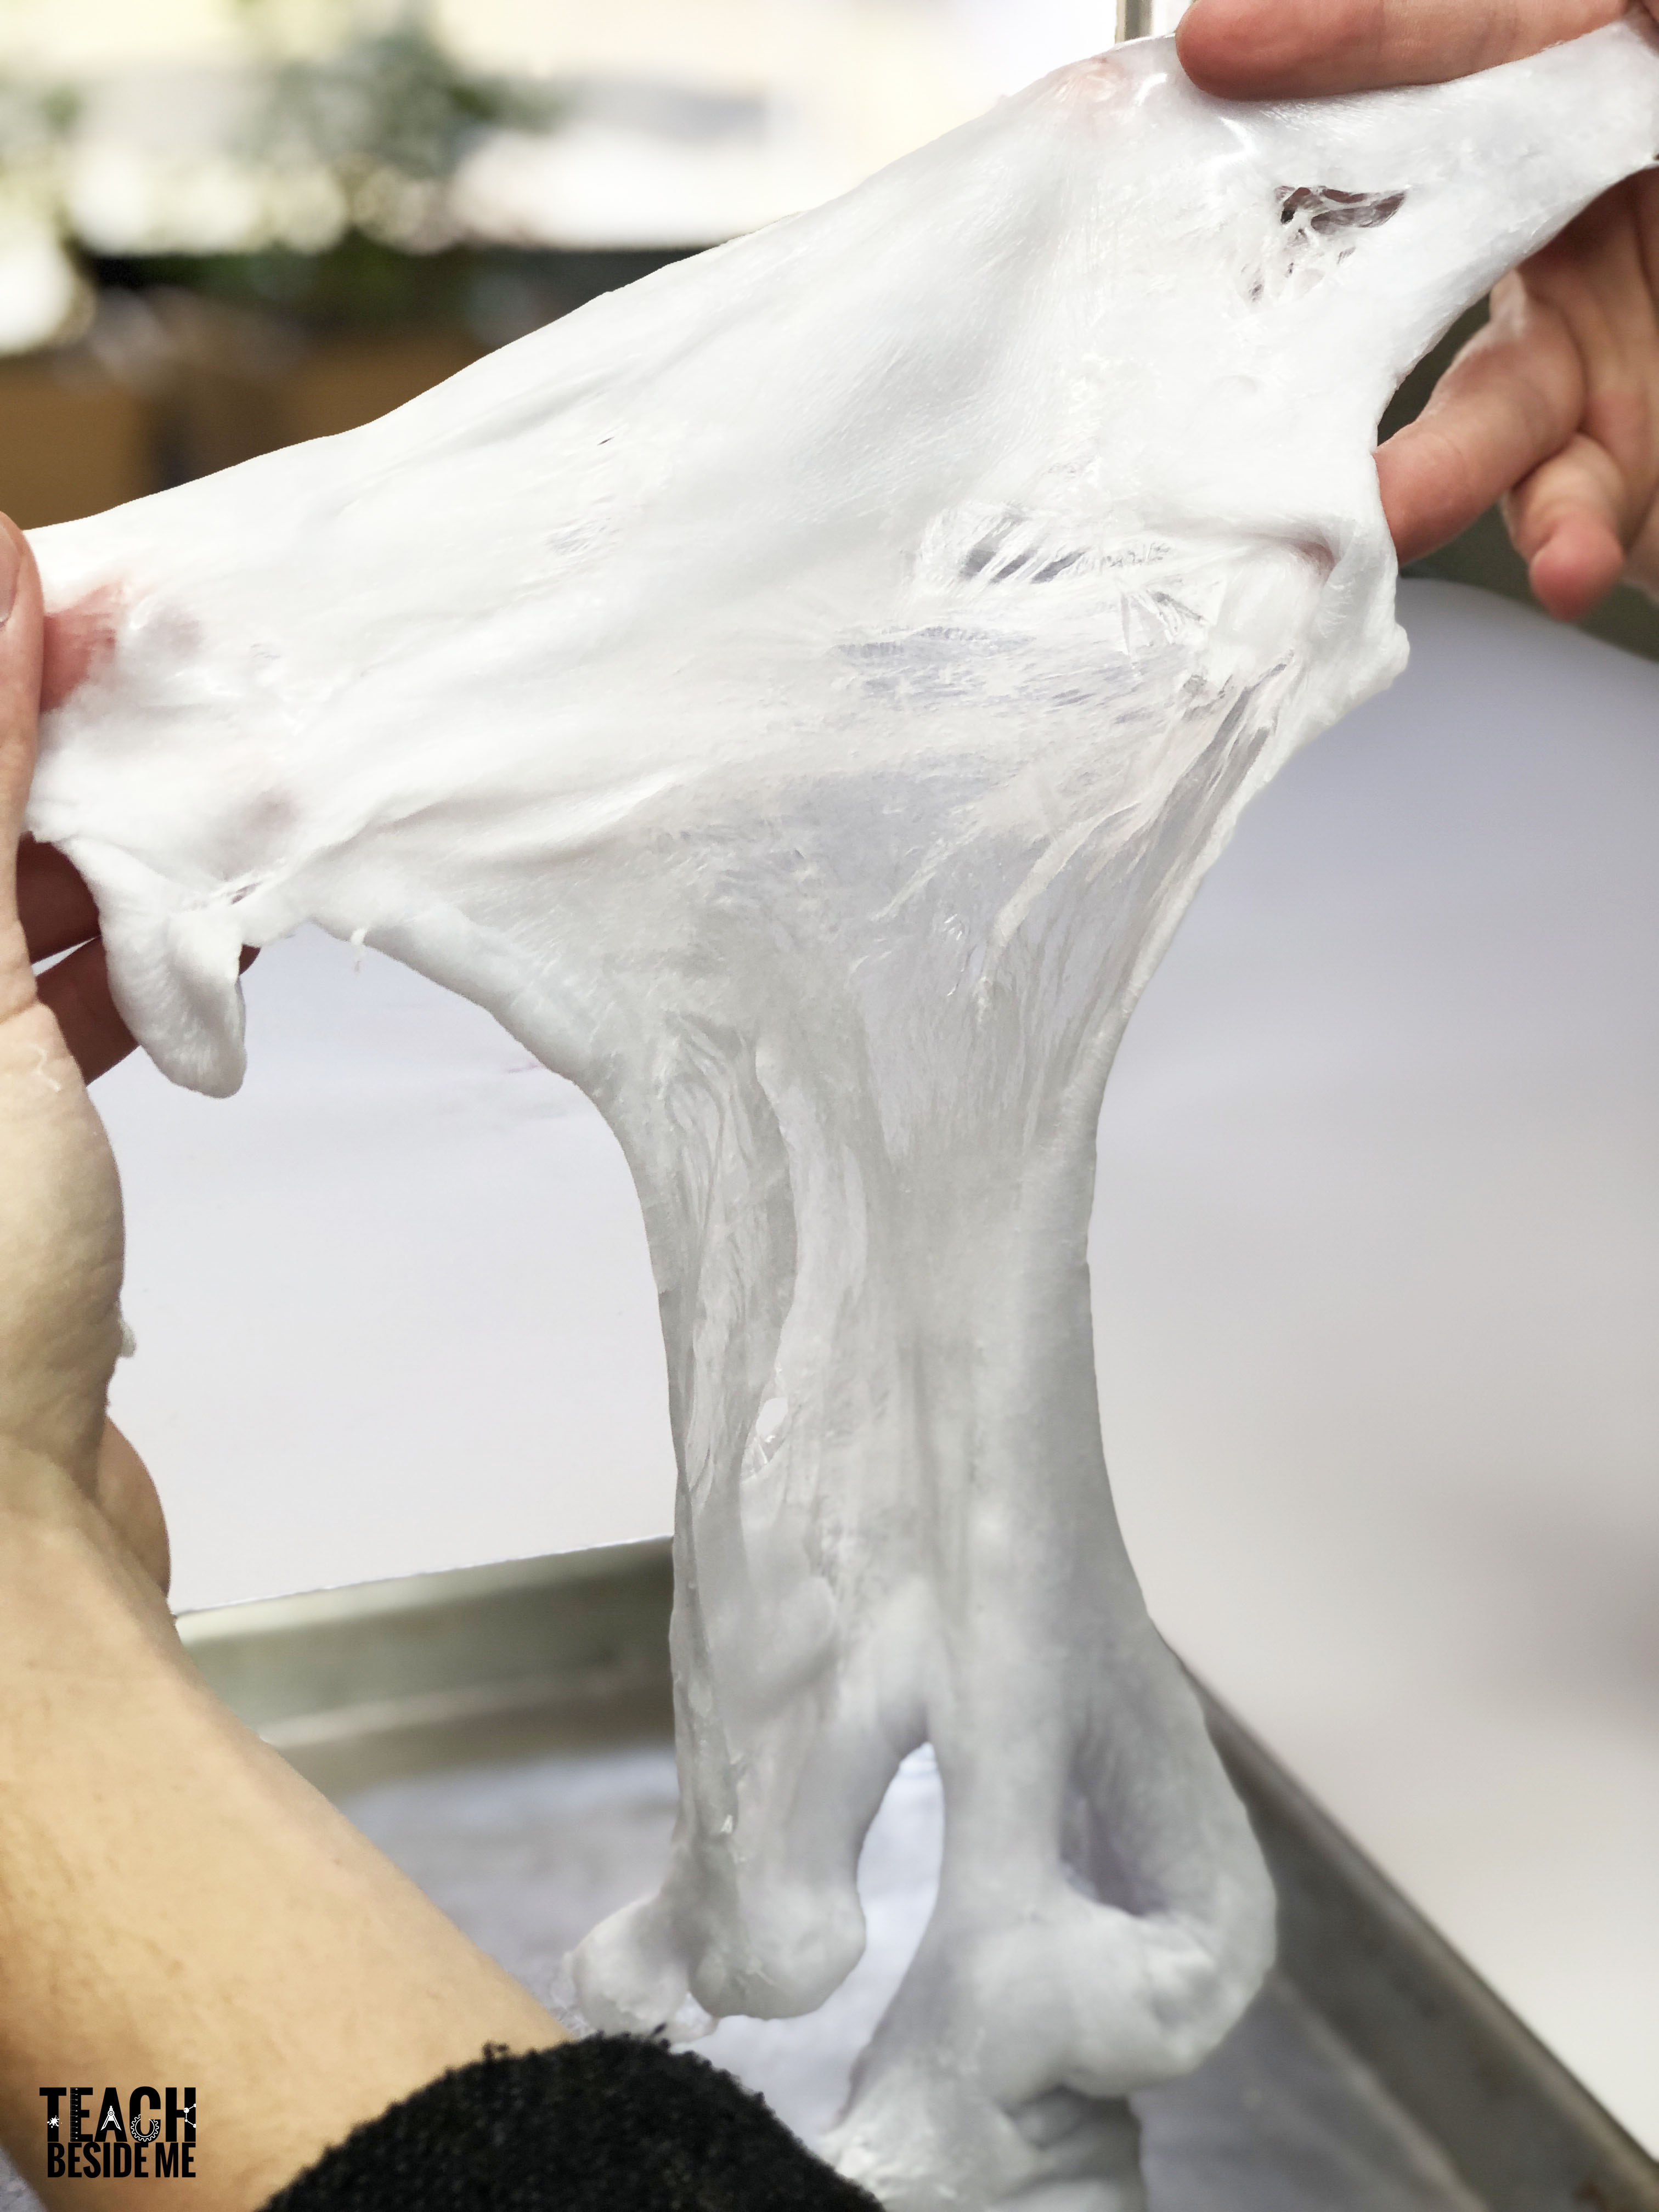 Melting Snowmen: Acetone and Styrofoam Slime Experiment - Teach Beside Me